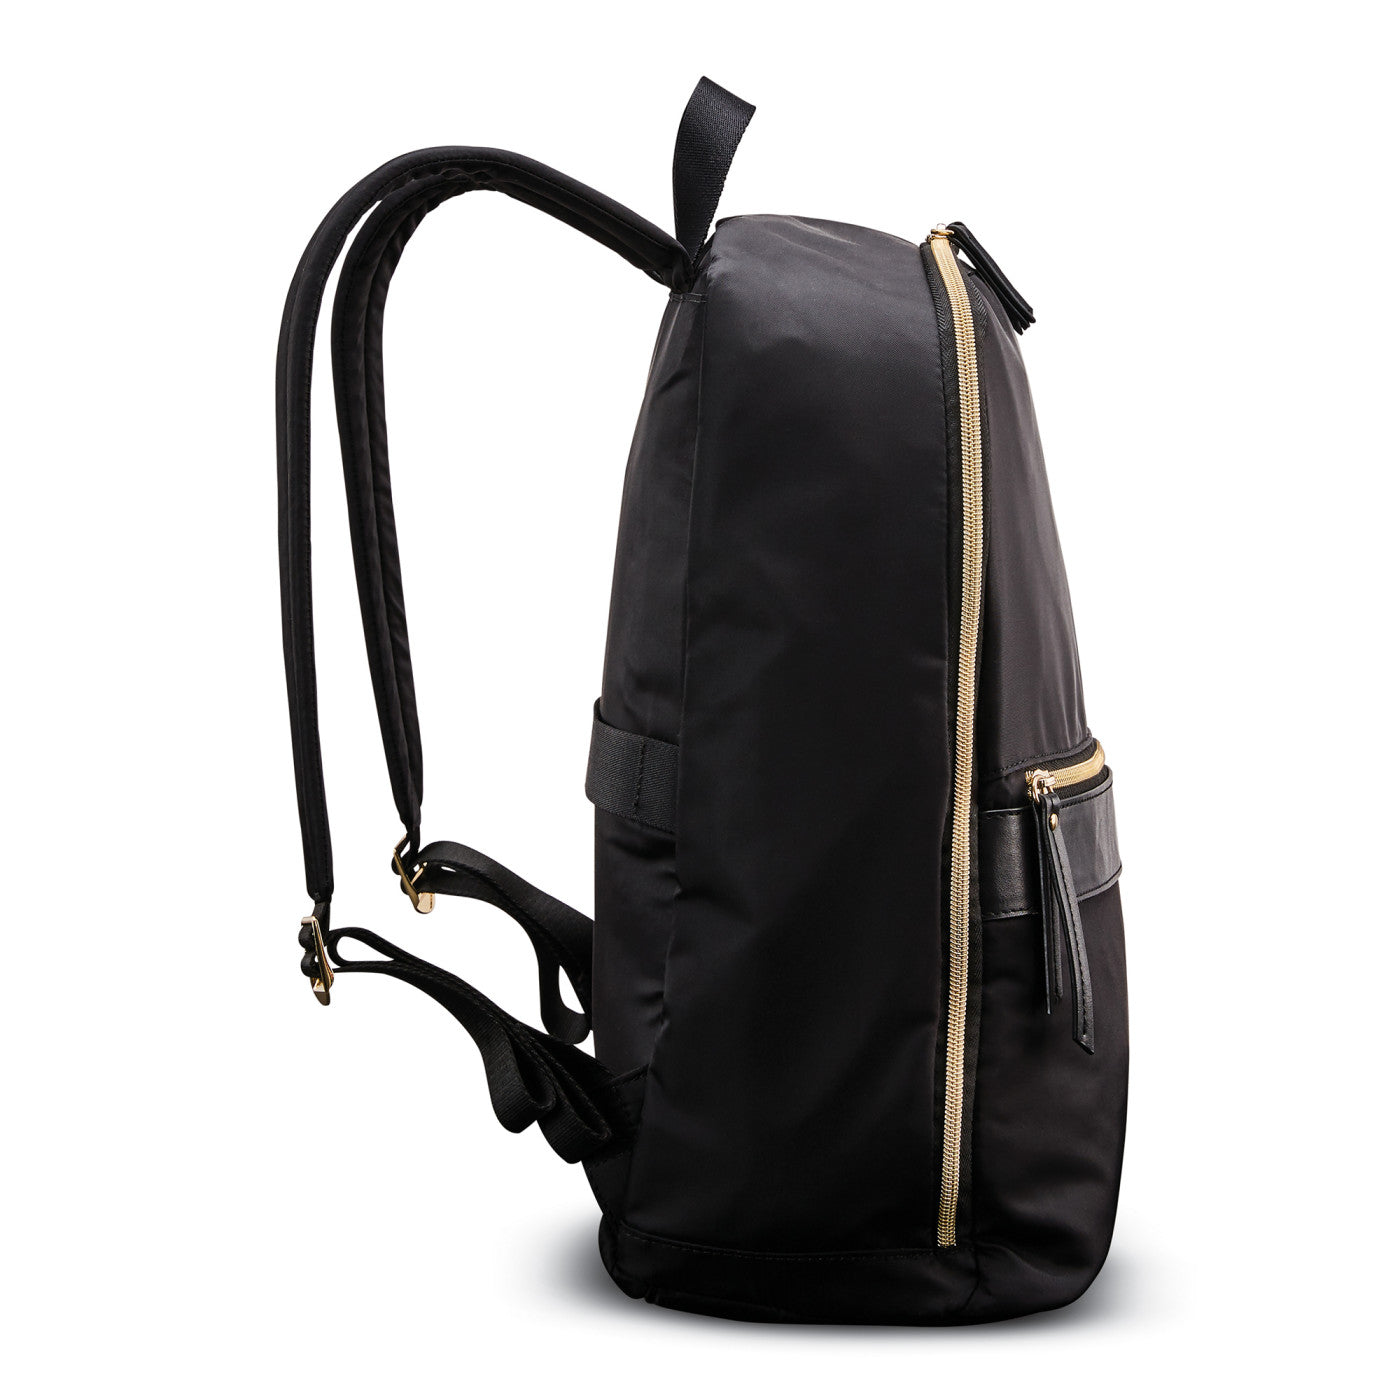 Samsonite Backpack, Black, Leather